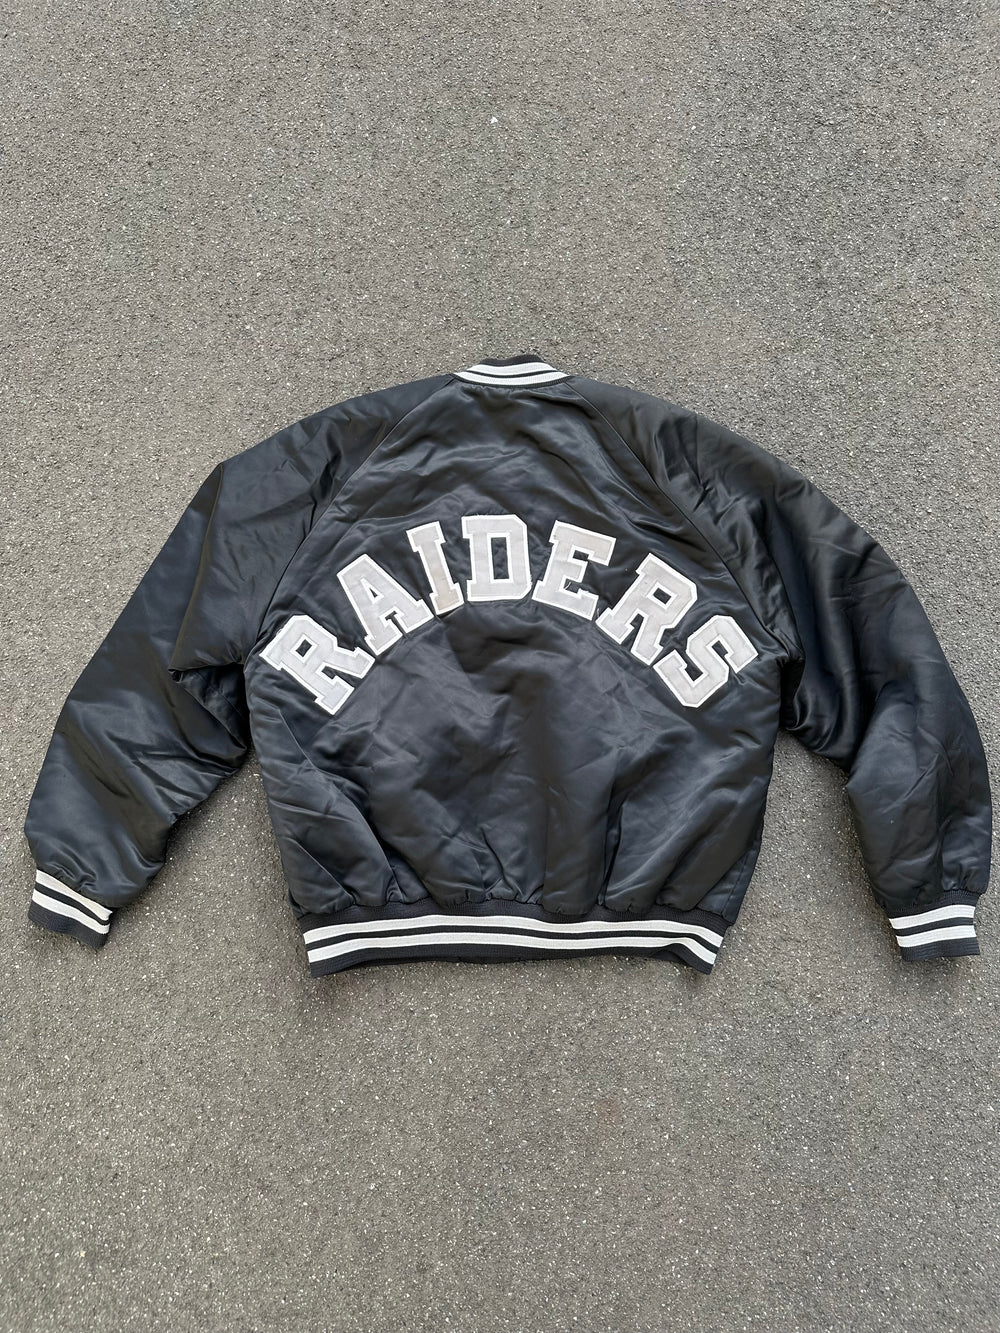 Vintage Raiders NFL Collegejacket (L)